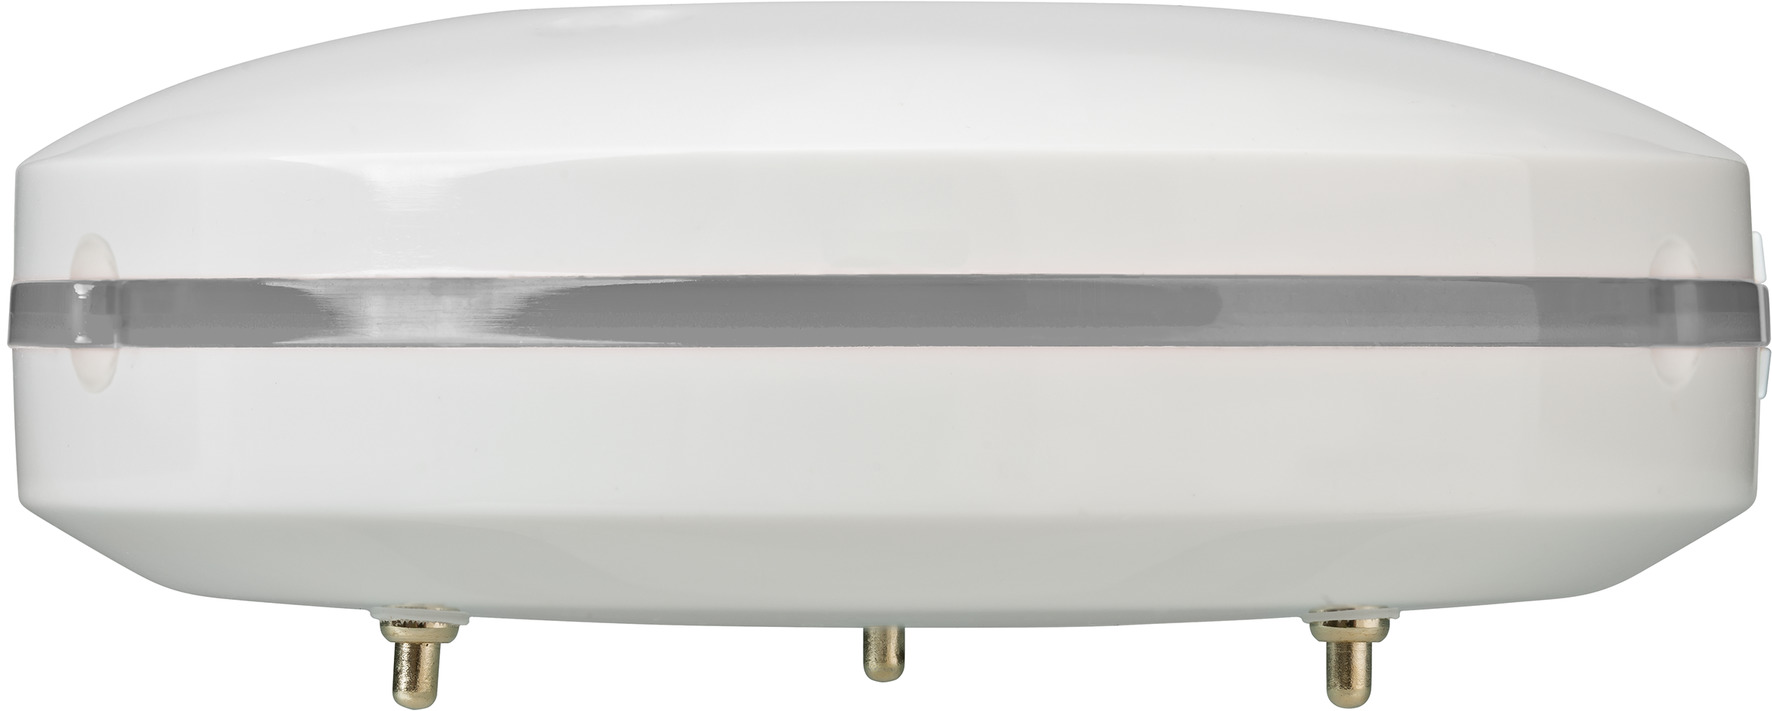 brennenstuhl®Connect Zigbee temperature and humidity sensor TFS CZ 01